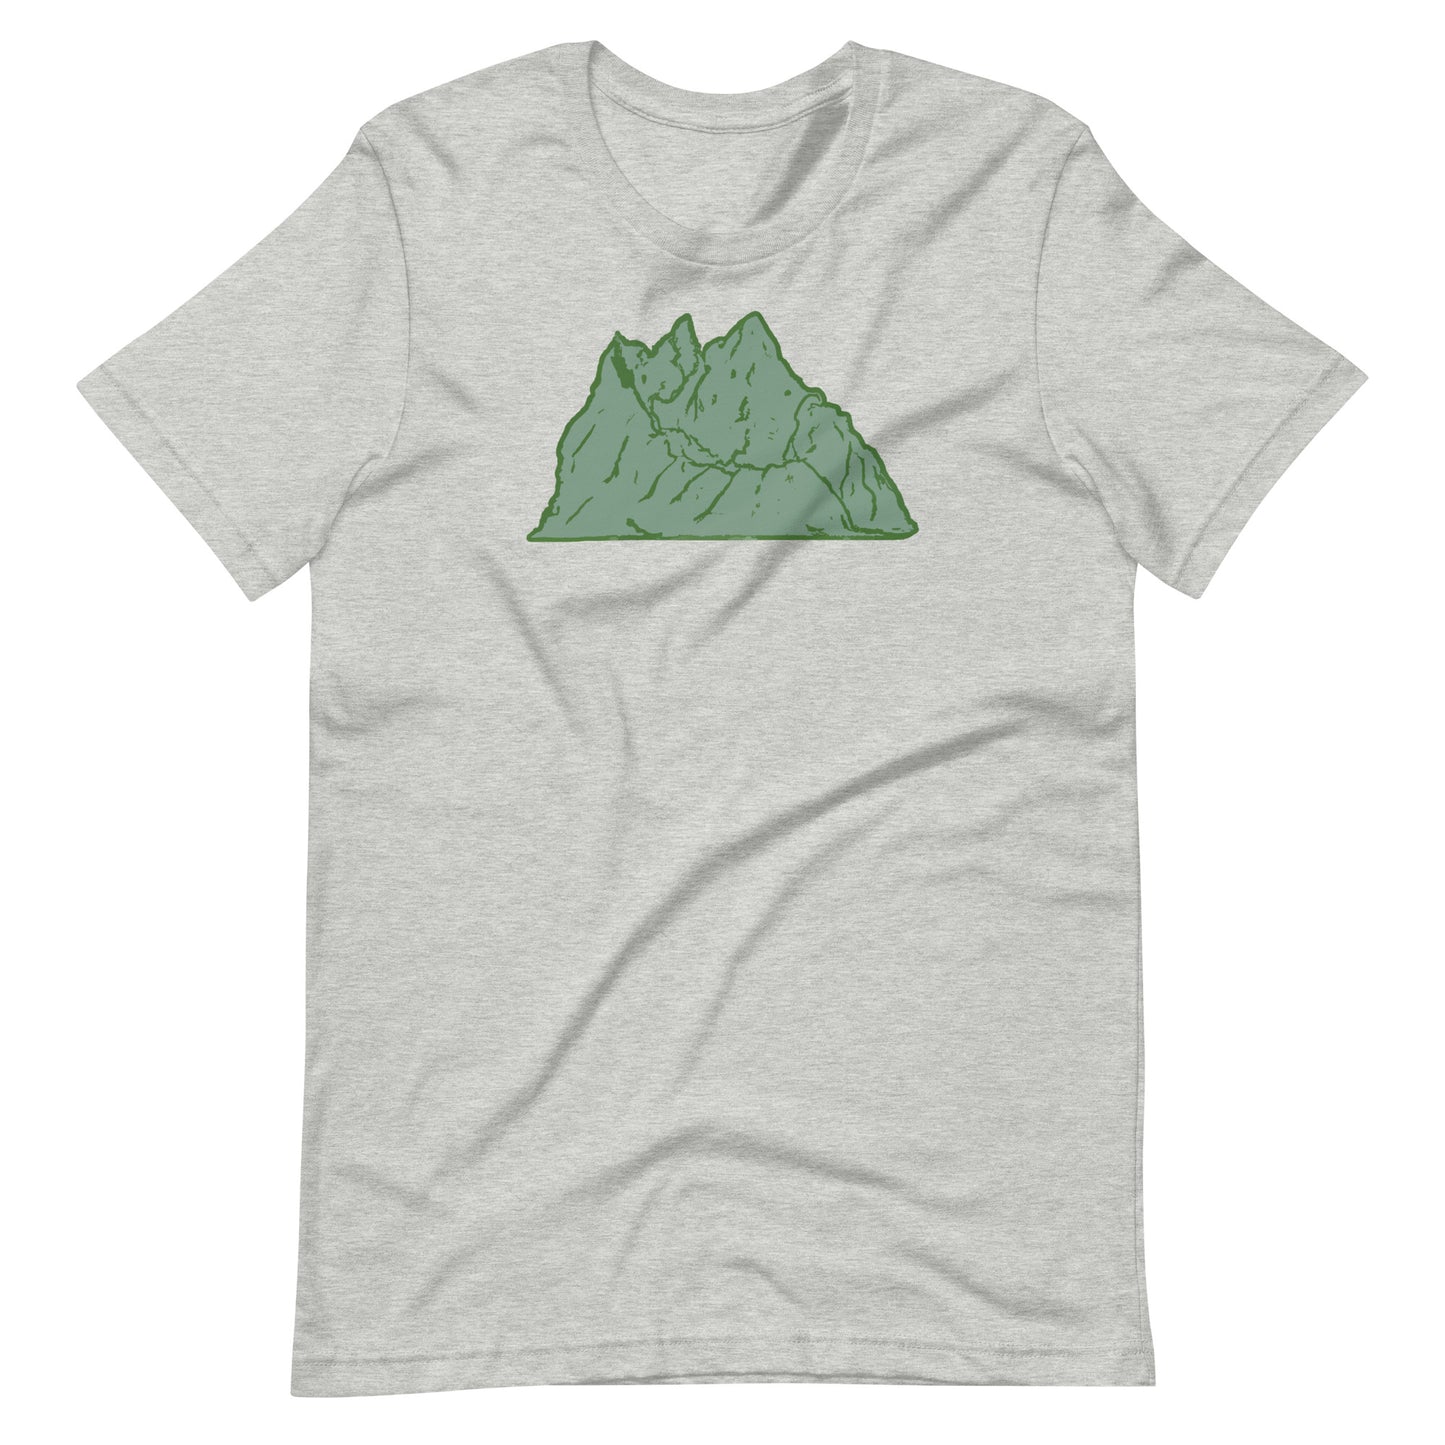 Green Mountain